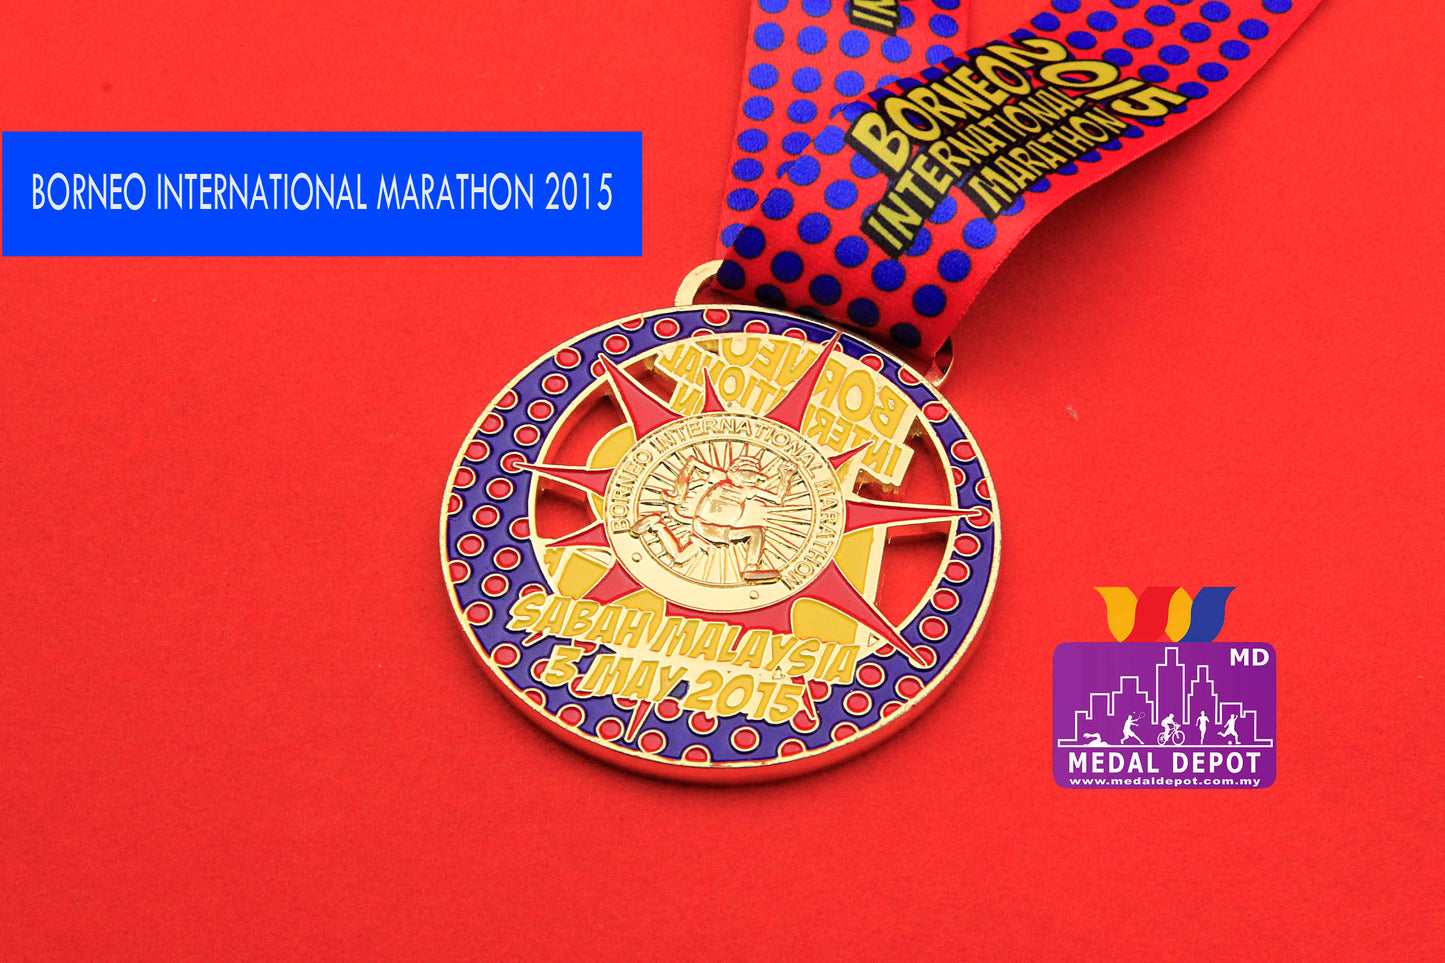 Borneo International Marathon 2015